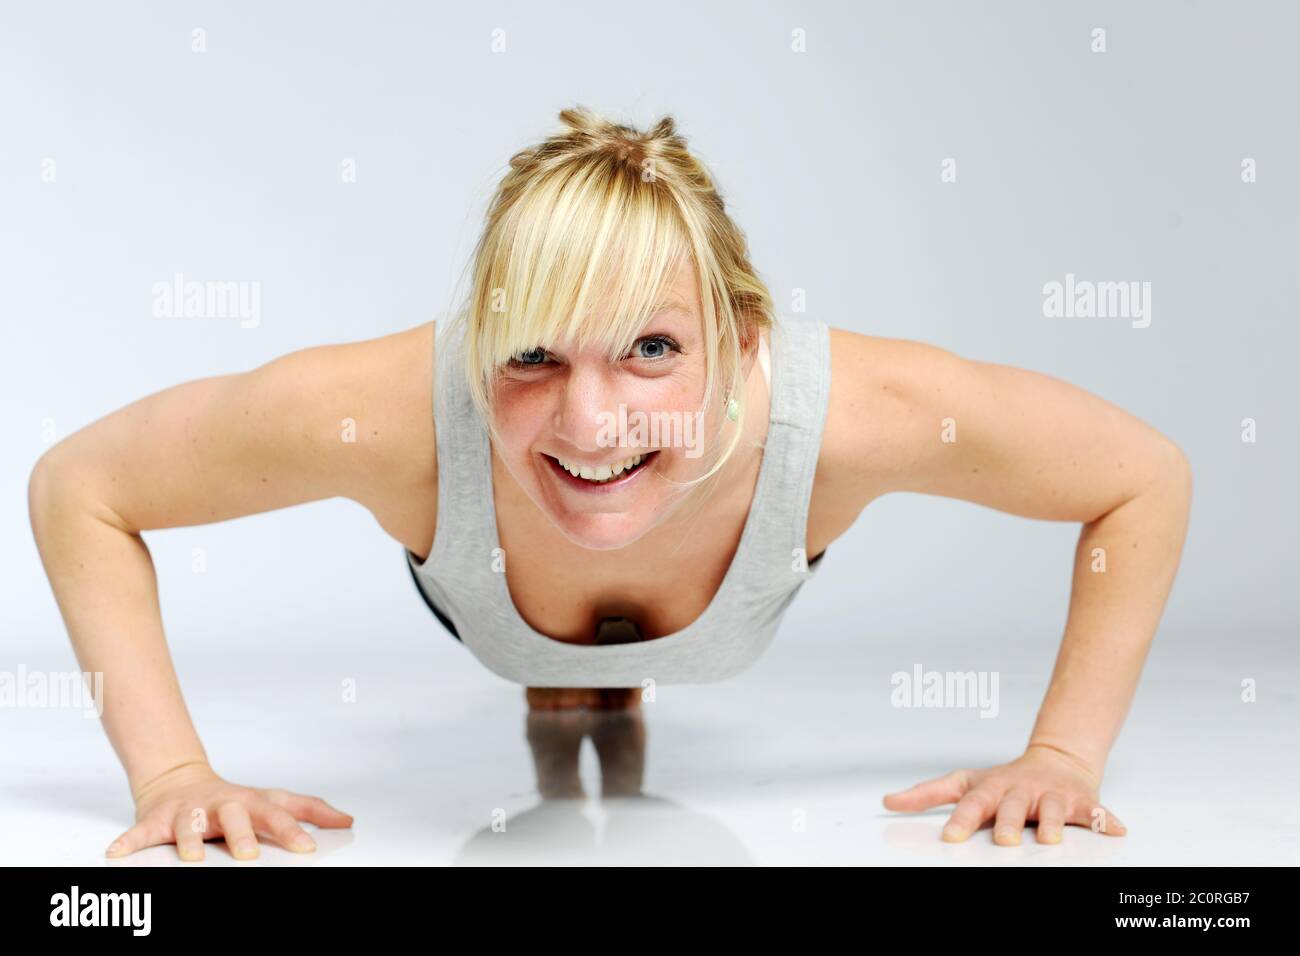 Funny Yoga Women Stock Photos - 9,720 Images